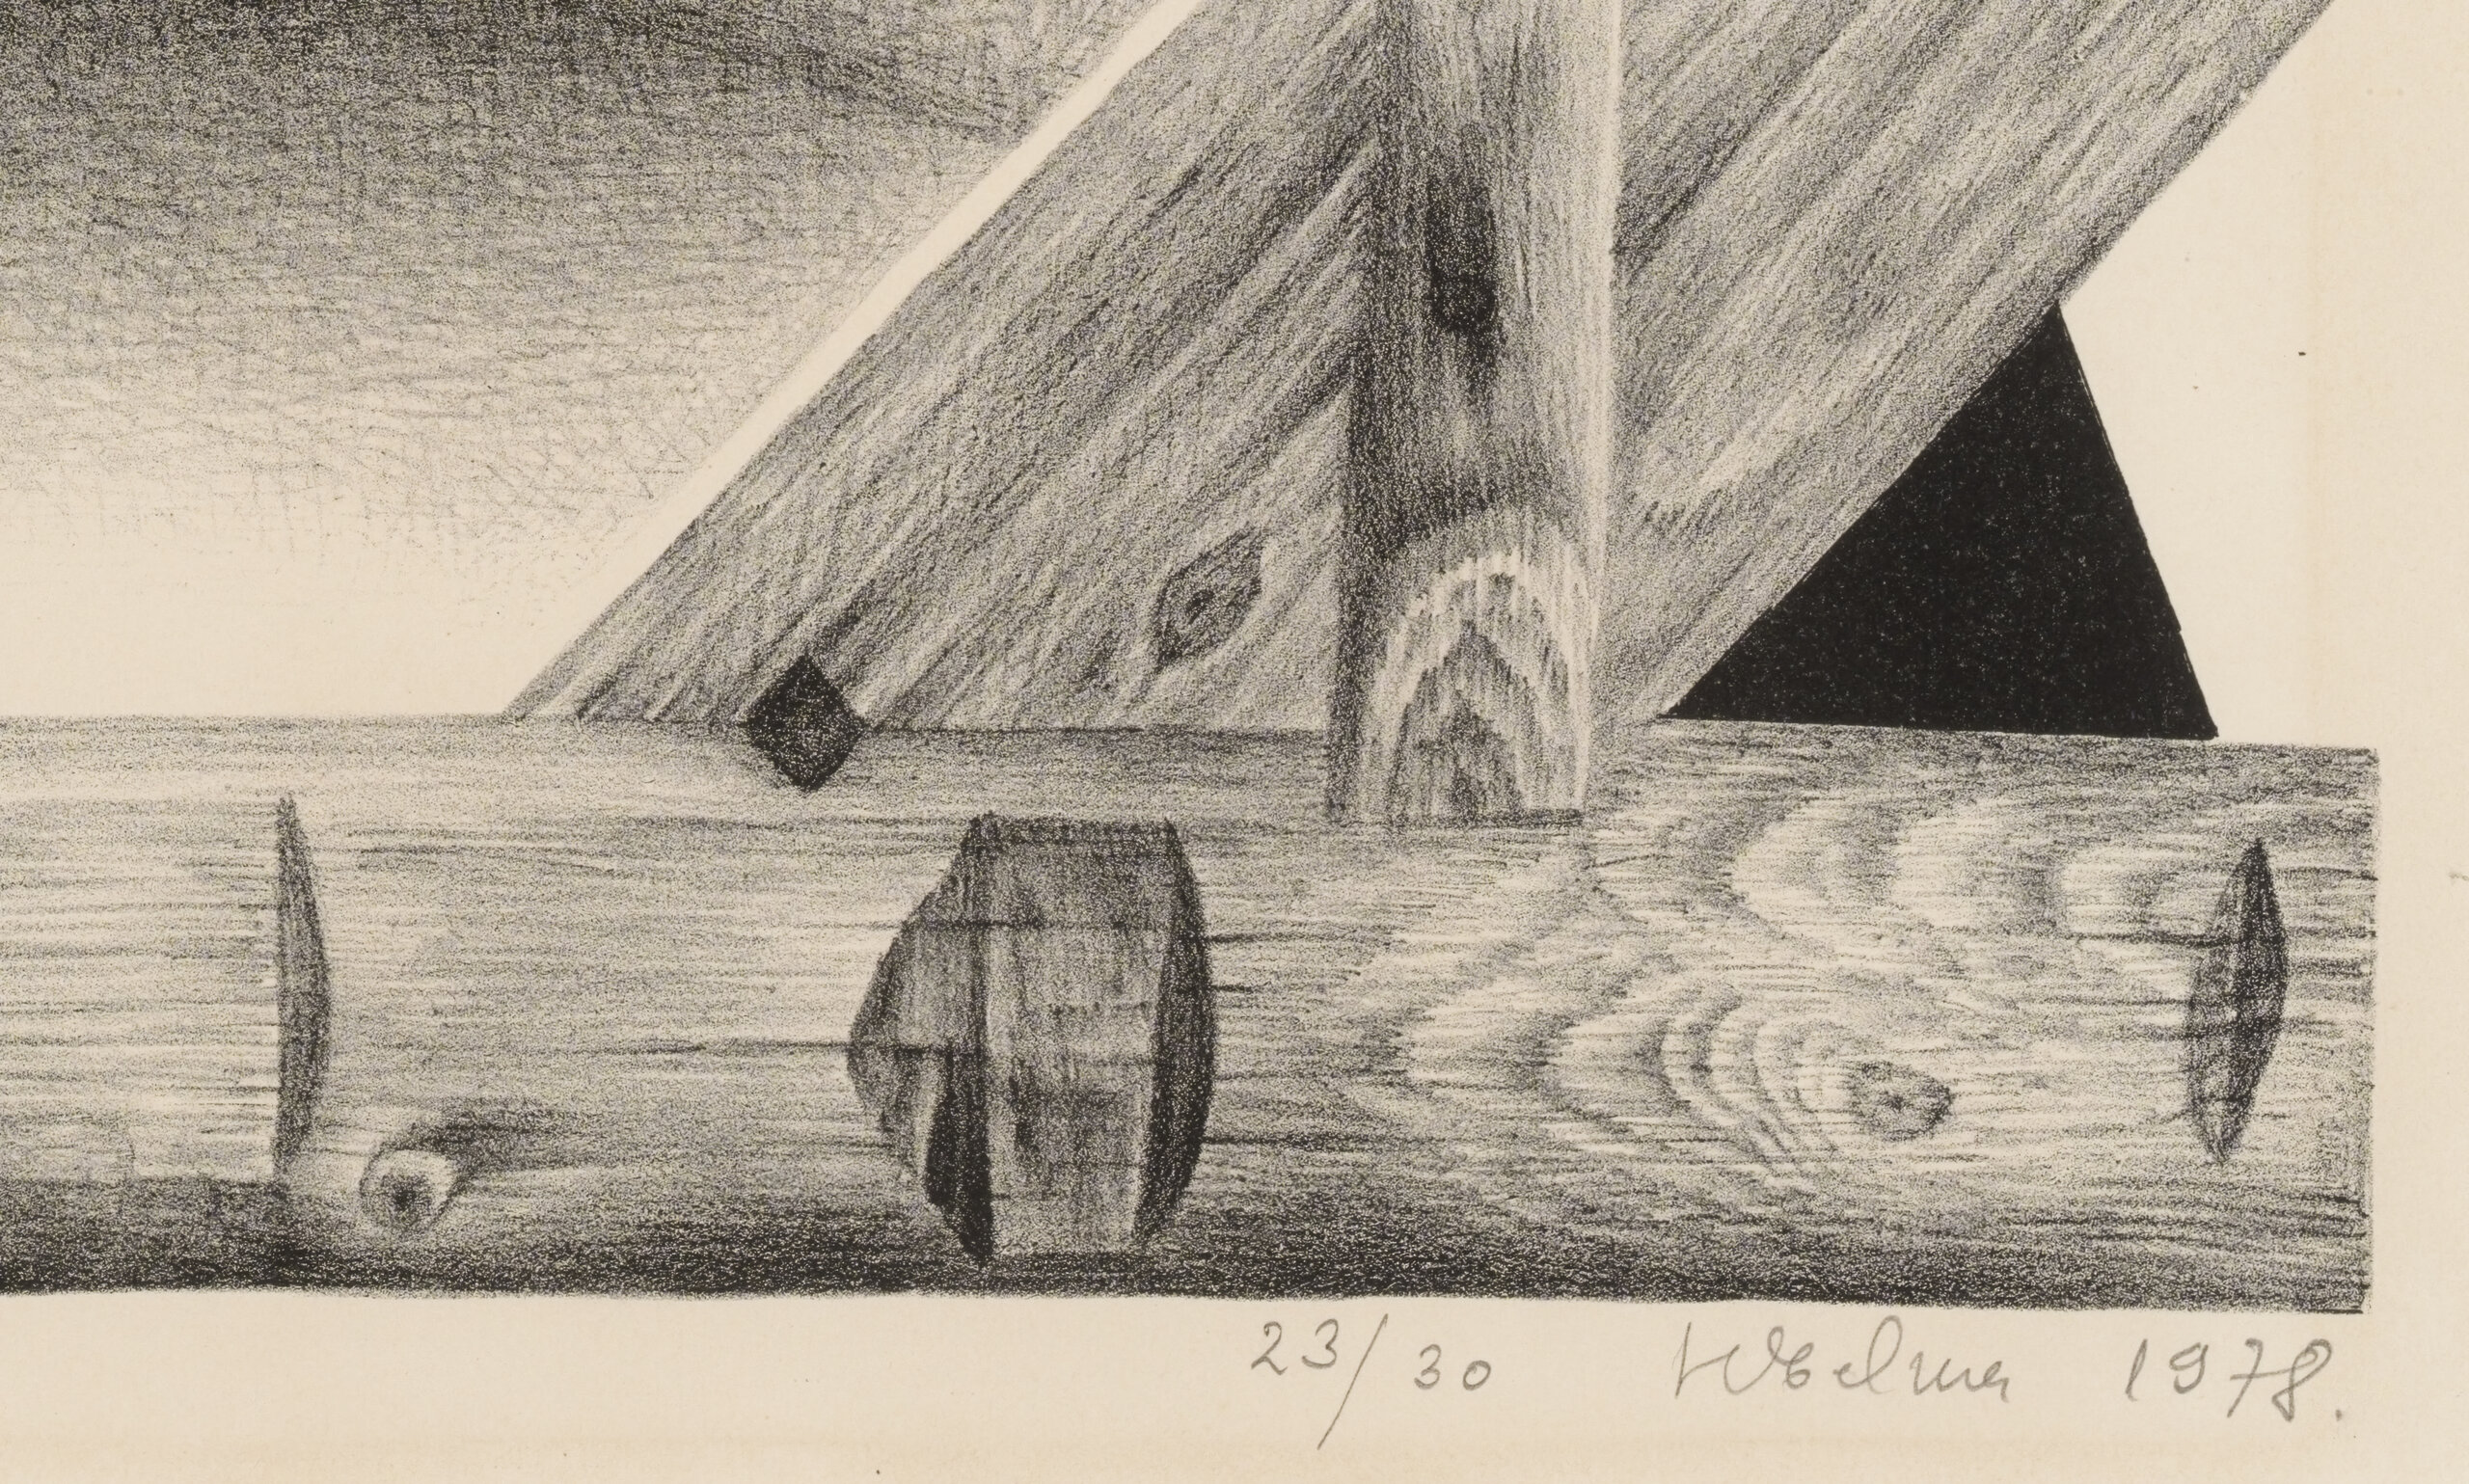 Herald Eelma “Maja” 1978. 72,8 x 60,8 cm.